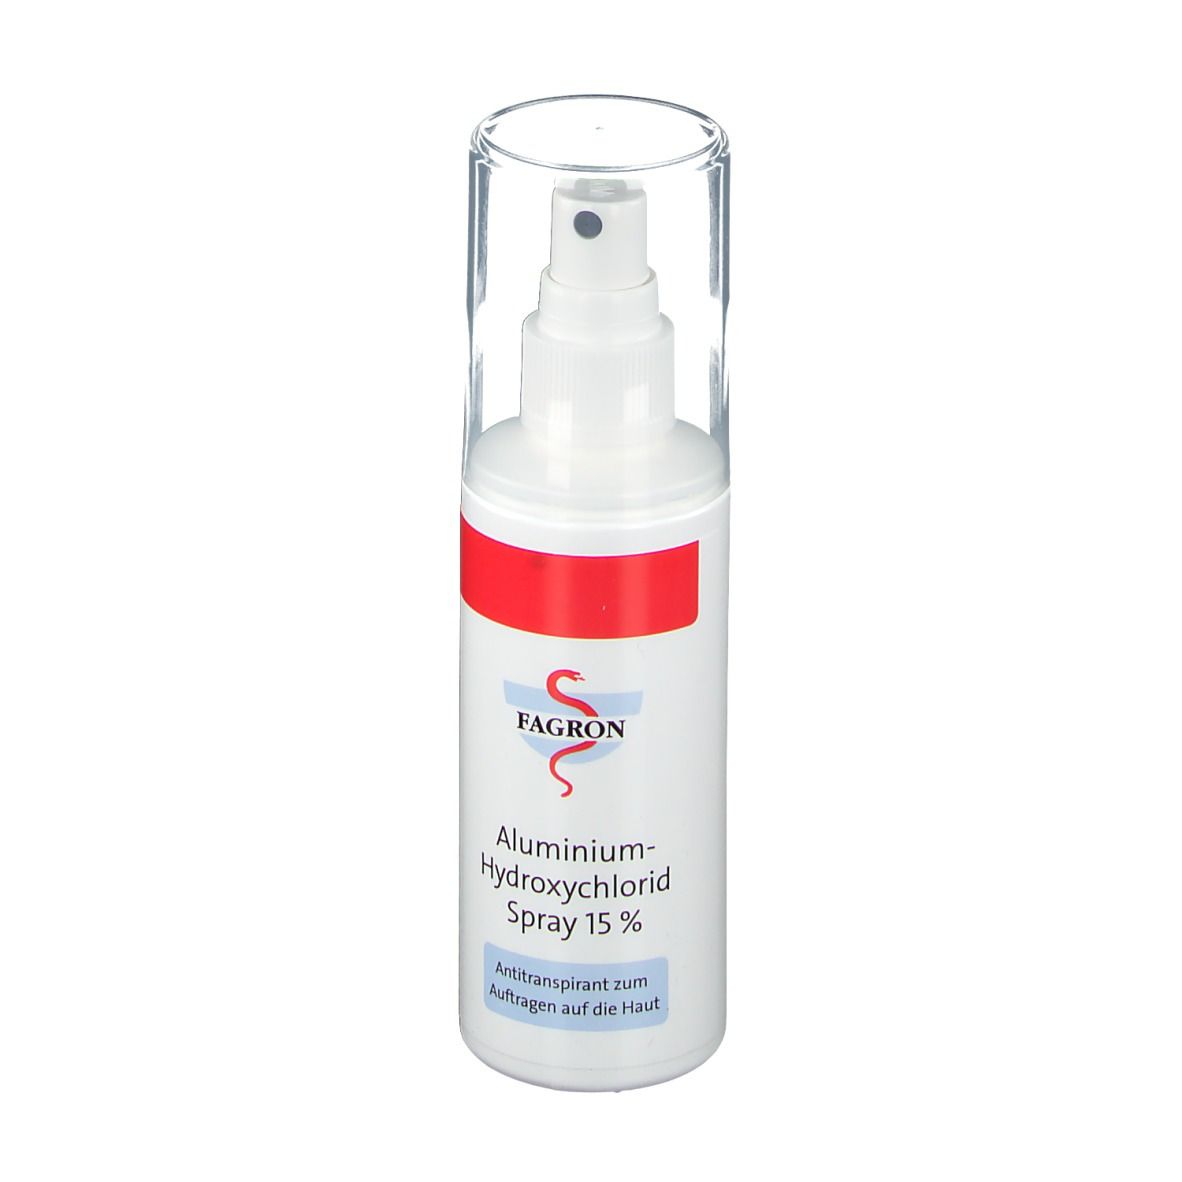 Fagron Aluminium-Hydroxychlorid Spray 15 %